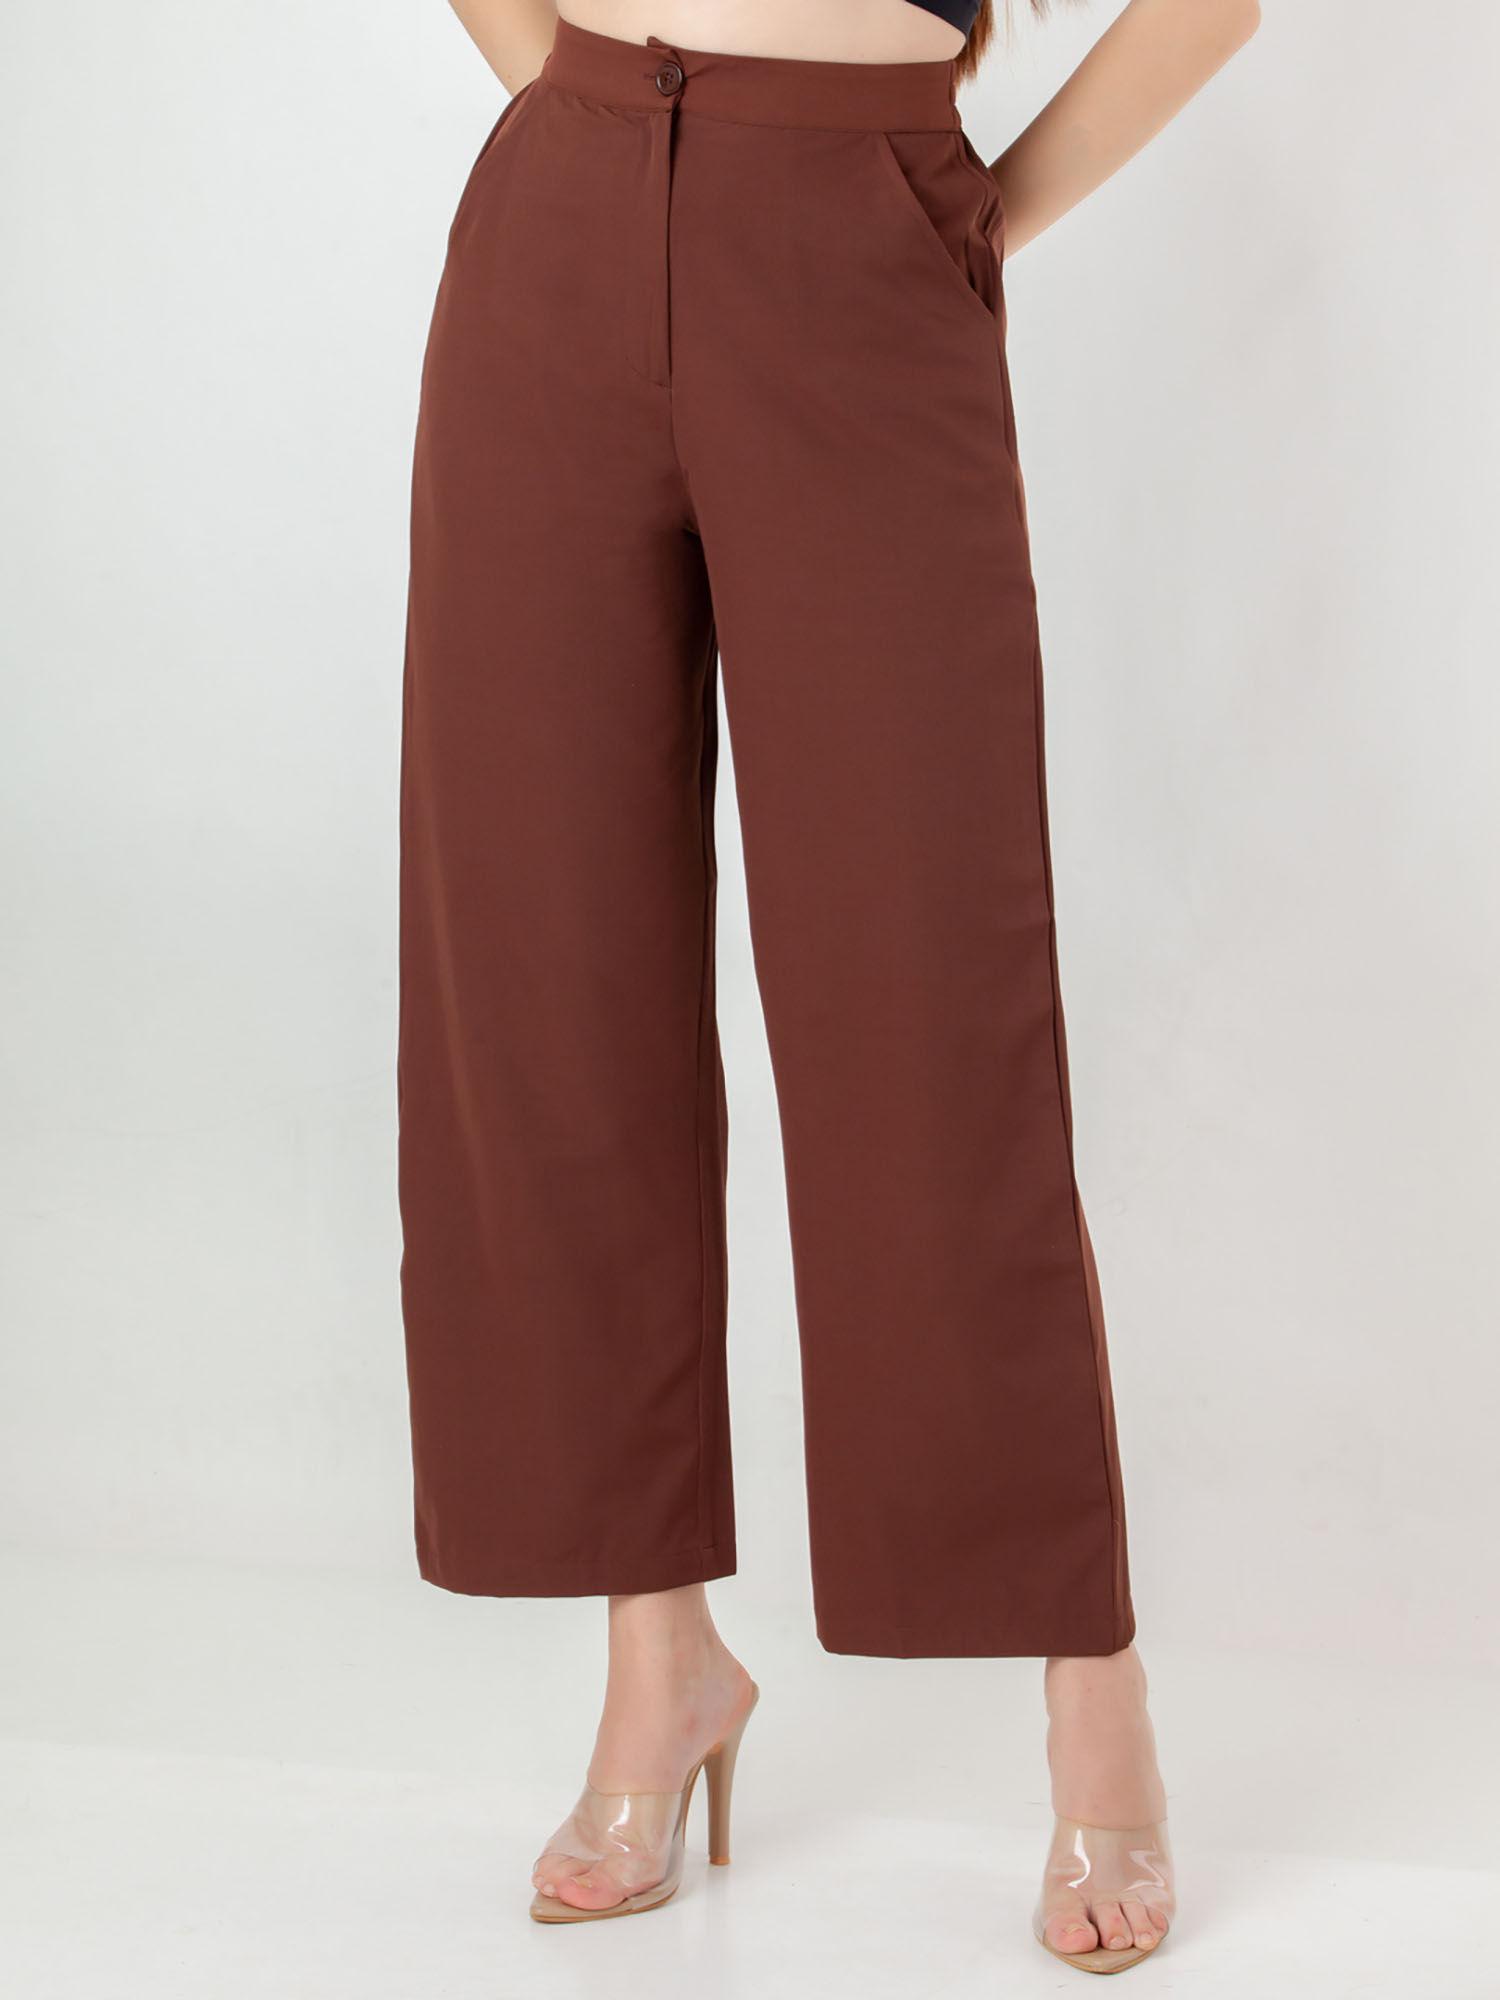 womens brown solid/plain trouser